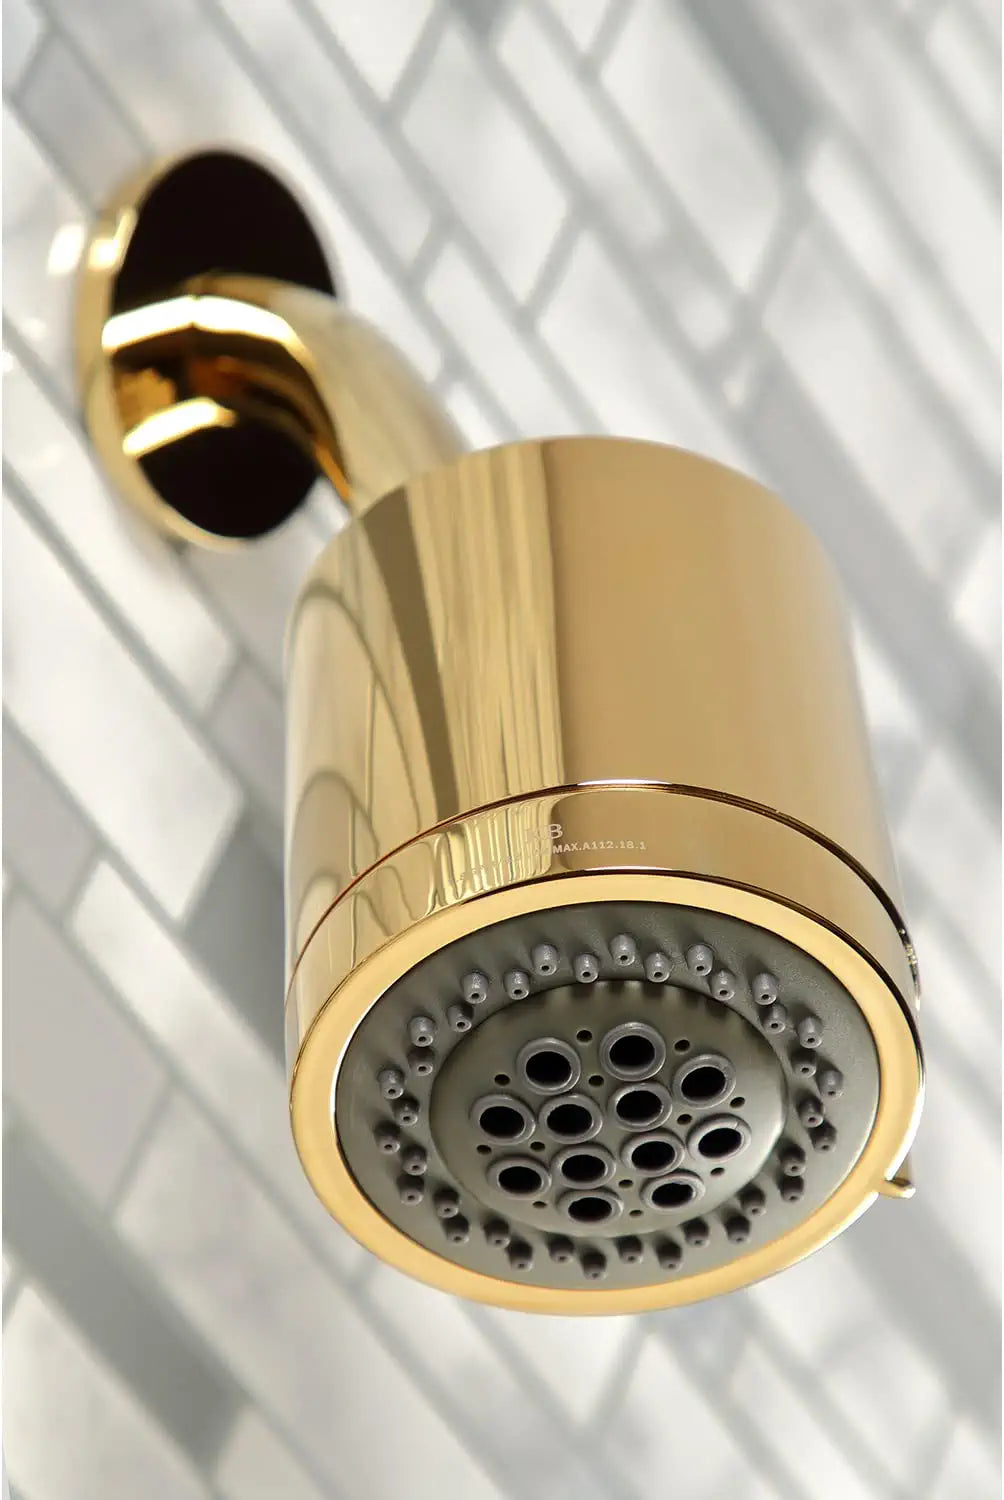 Kingston Brass KBX8132DPL Paris Tub and Shower Faucet, Polished Brass